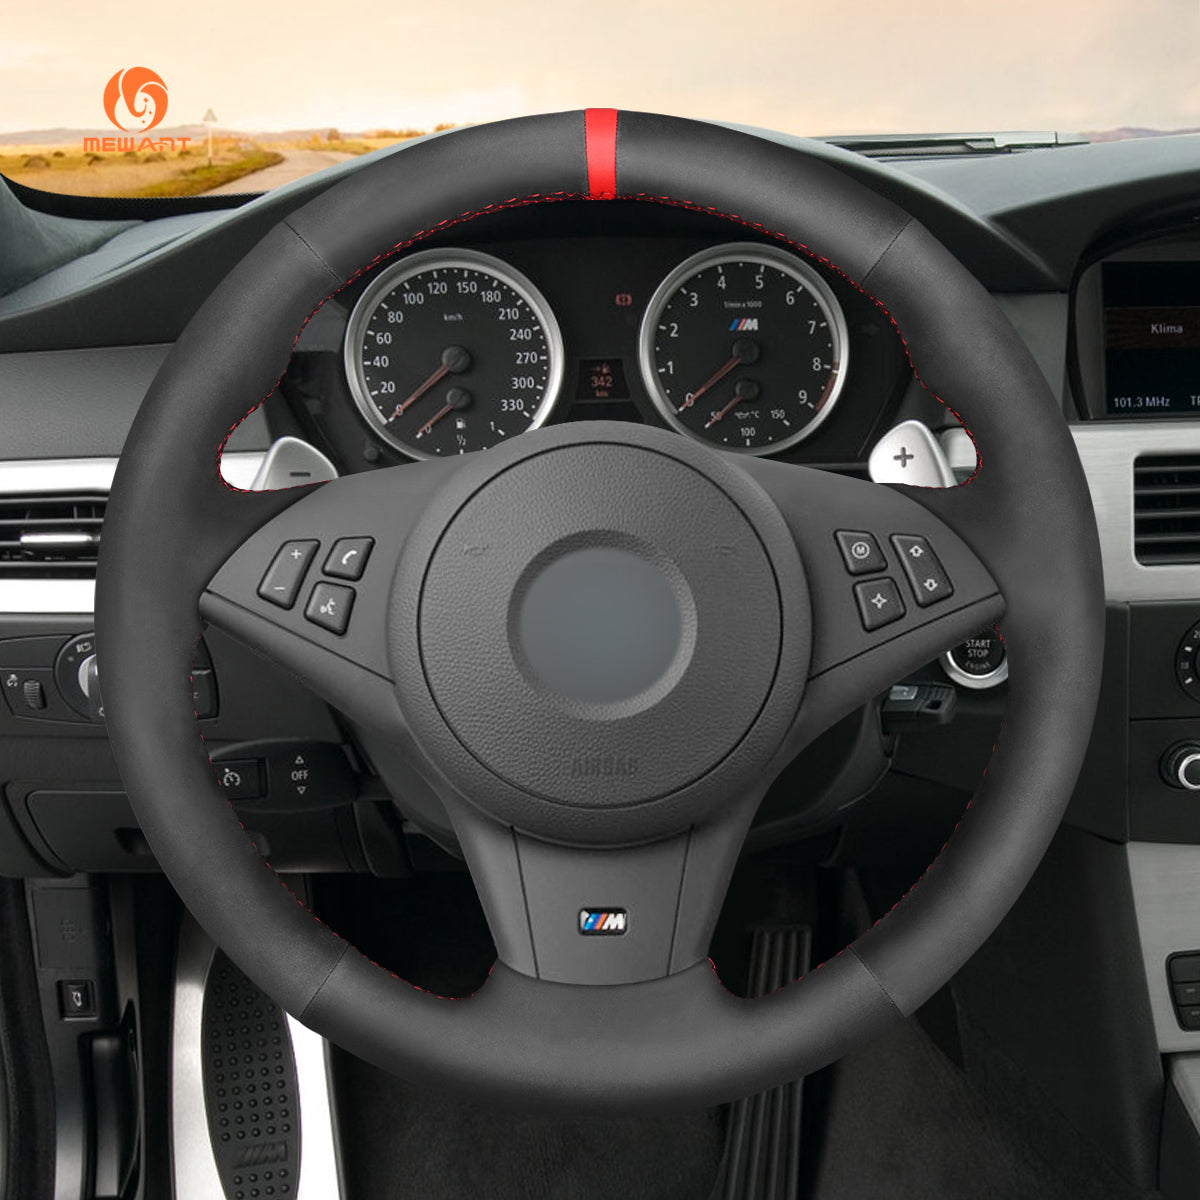 MEWANT Hand Stitch Car Steering Wheel Cover for BMW 5 Series E60 E61 2003-2010 / 6 Series E63 E64 2004-2009